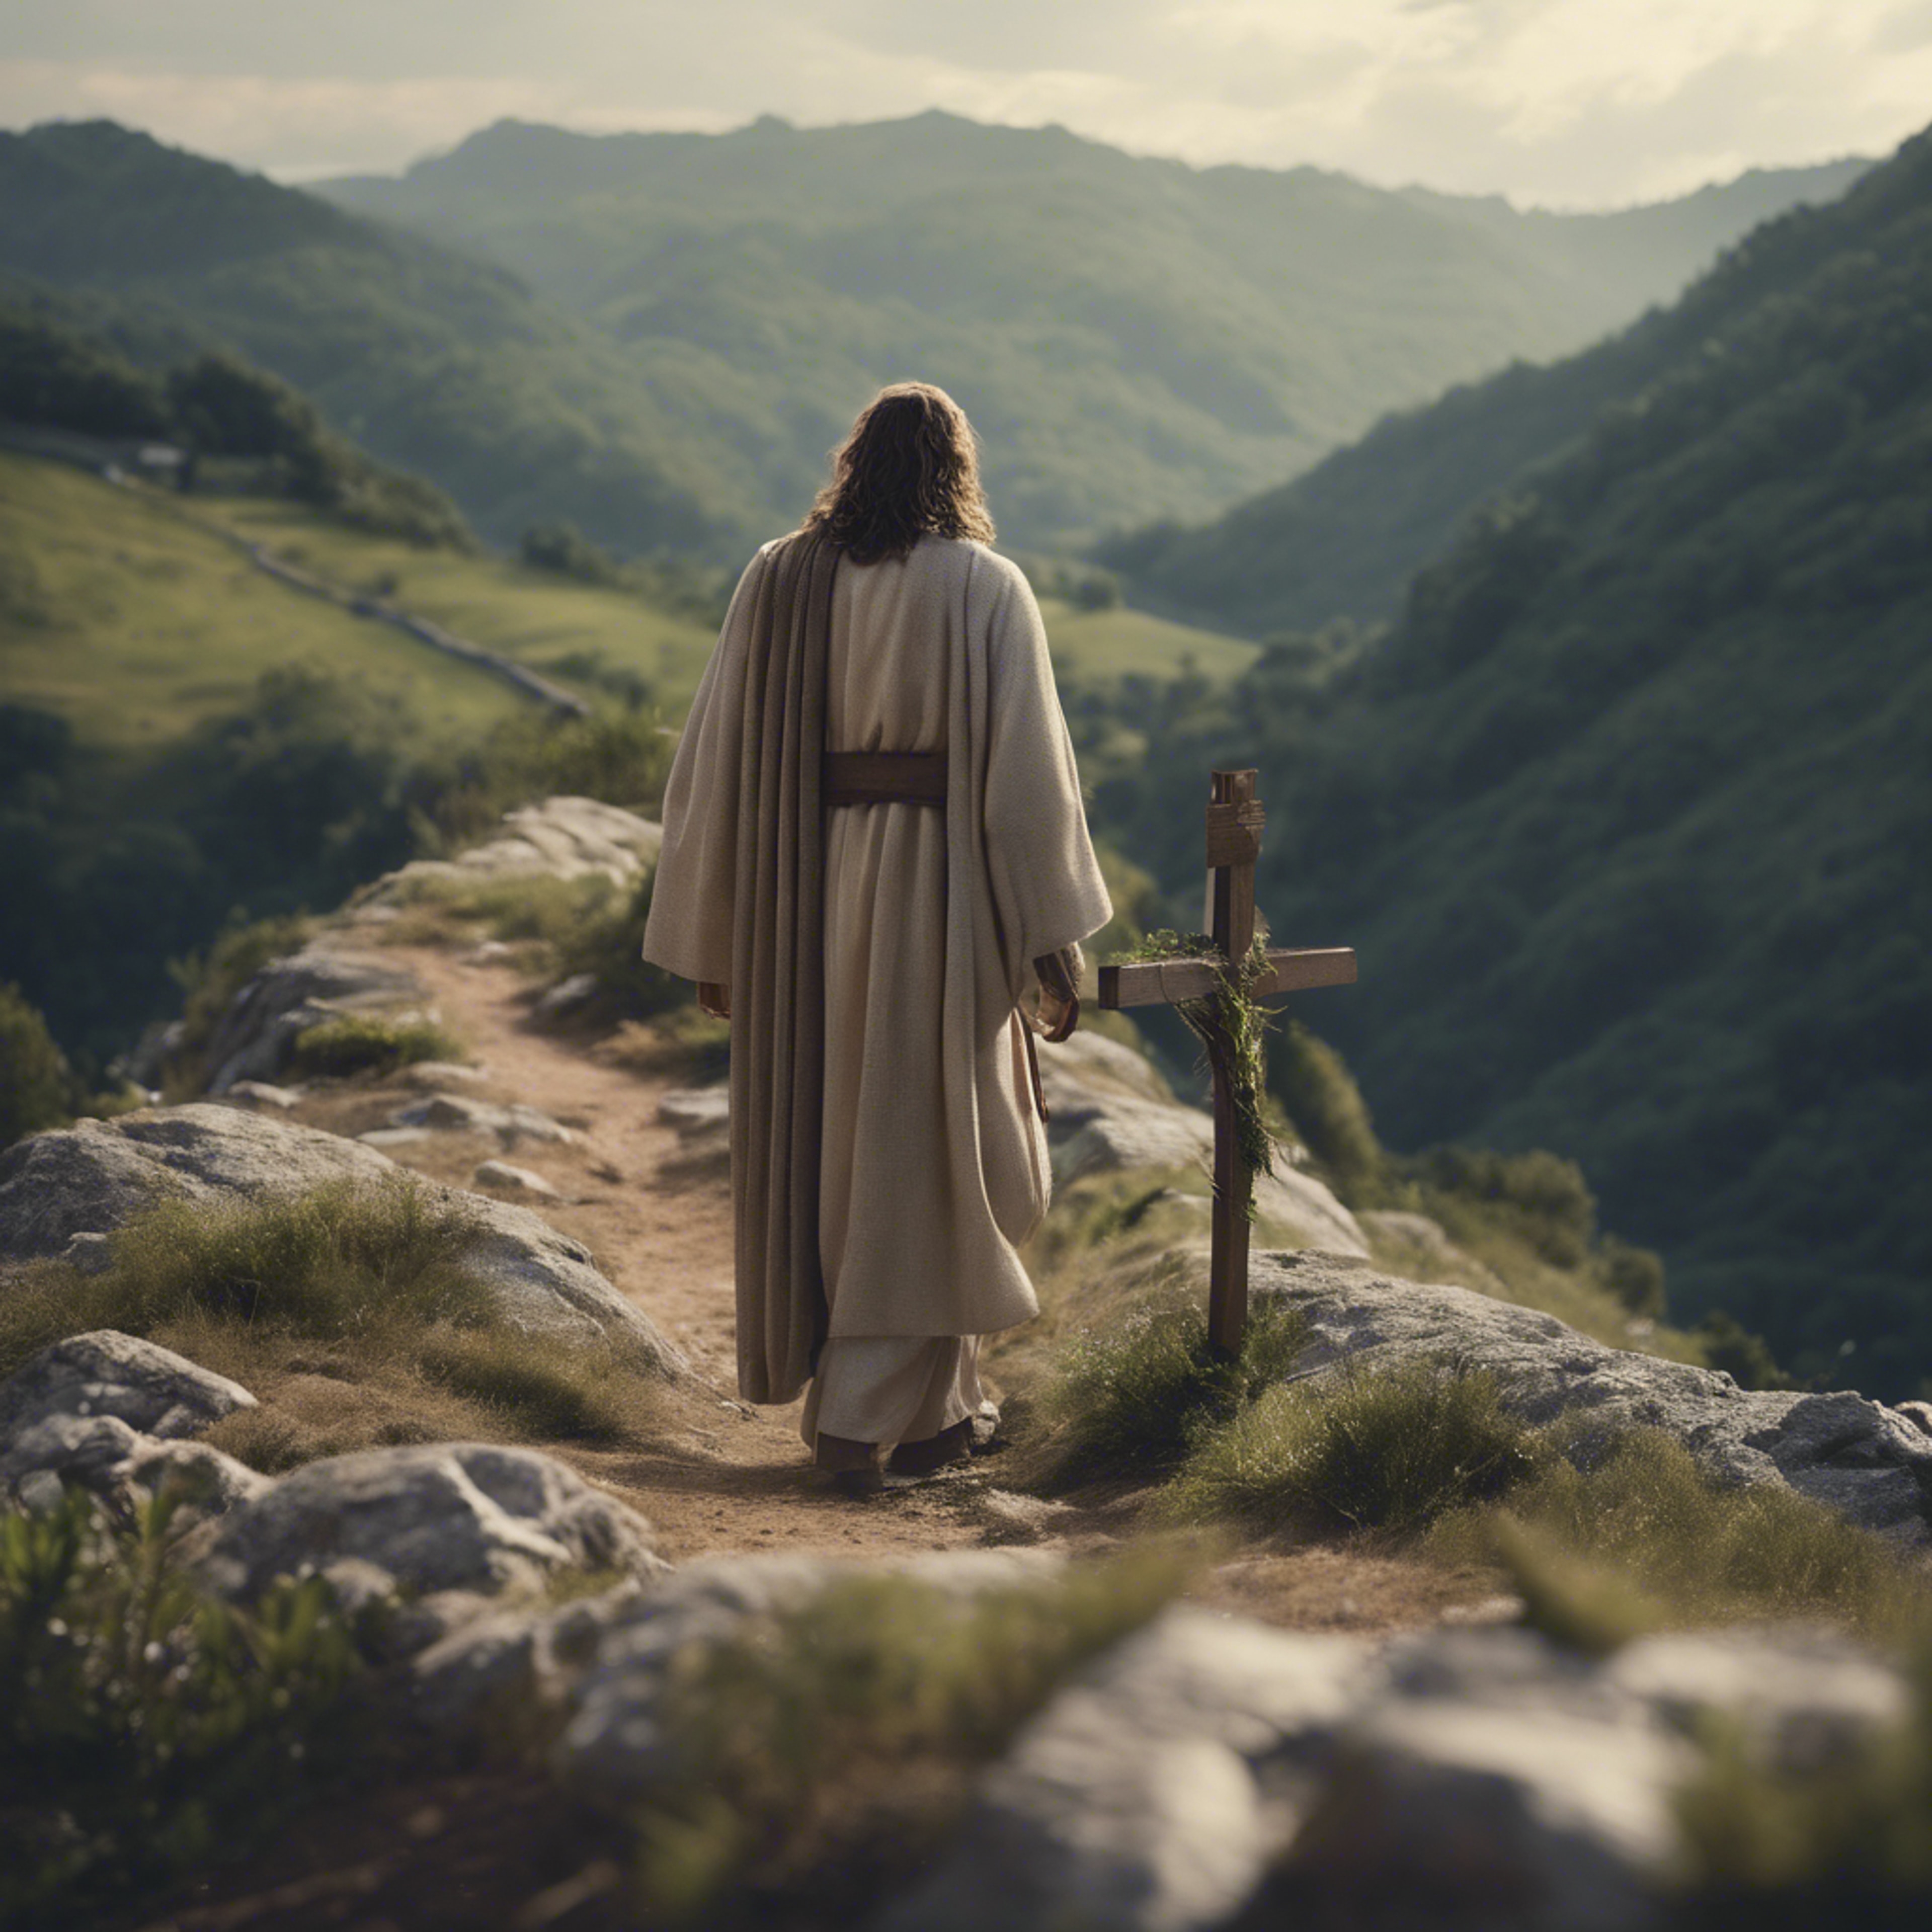 A somber yet inspiring scene of Jesus carrying the cross along a winding mountain path. Tapeta[cec6dd957e1b48d0bb97]